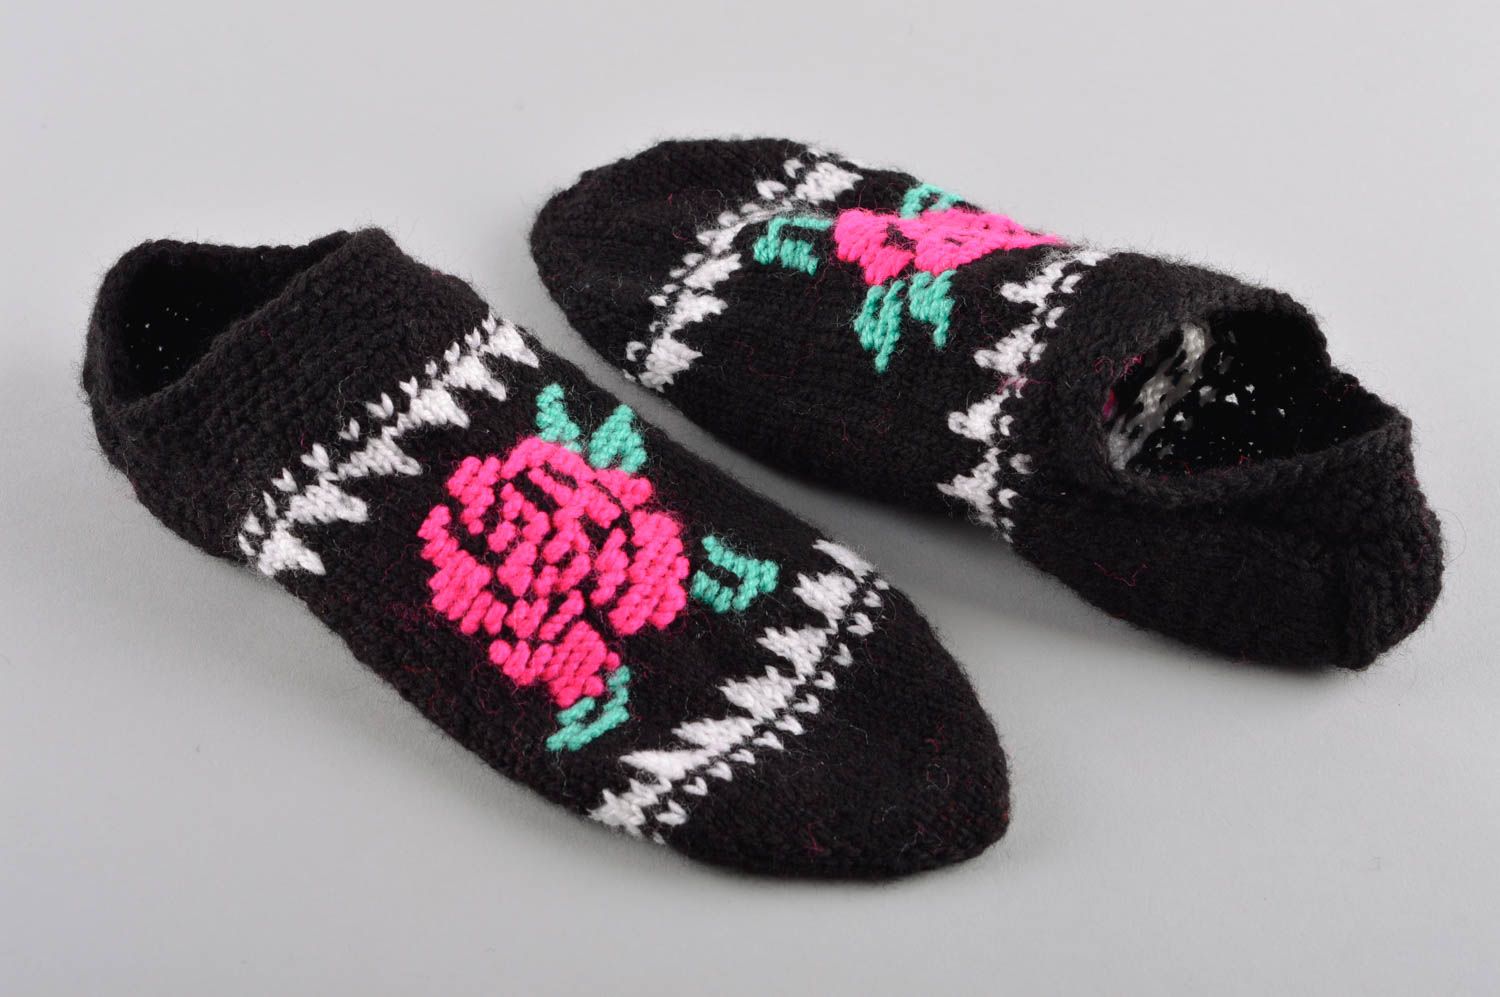 Handmade knitted socks winter socks winter accessories present for friend photo 4